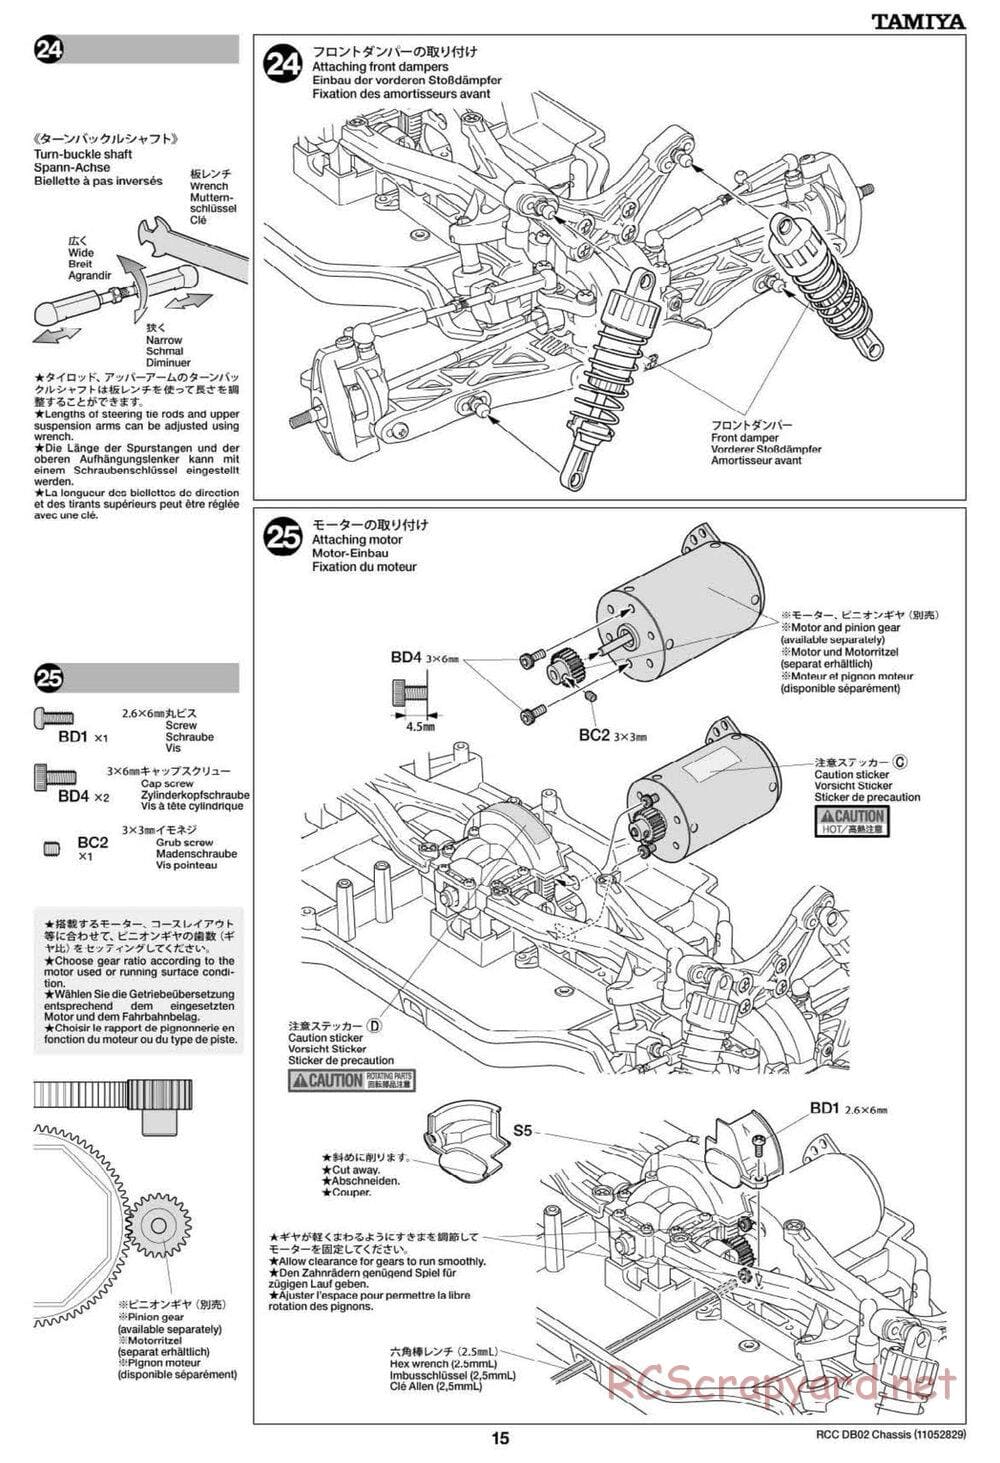 Tamiya - Leonis - DB-02 Chassis - Manual - Page 15